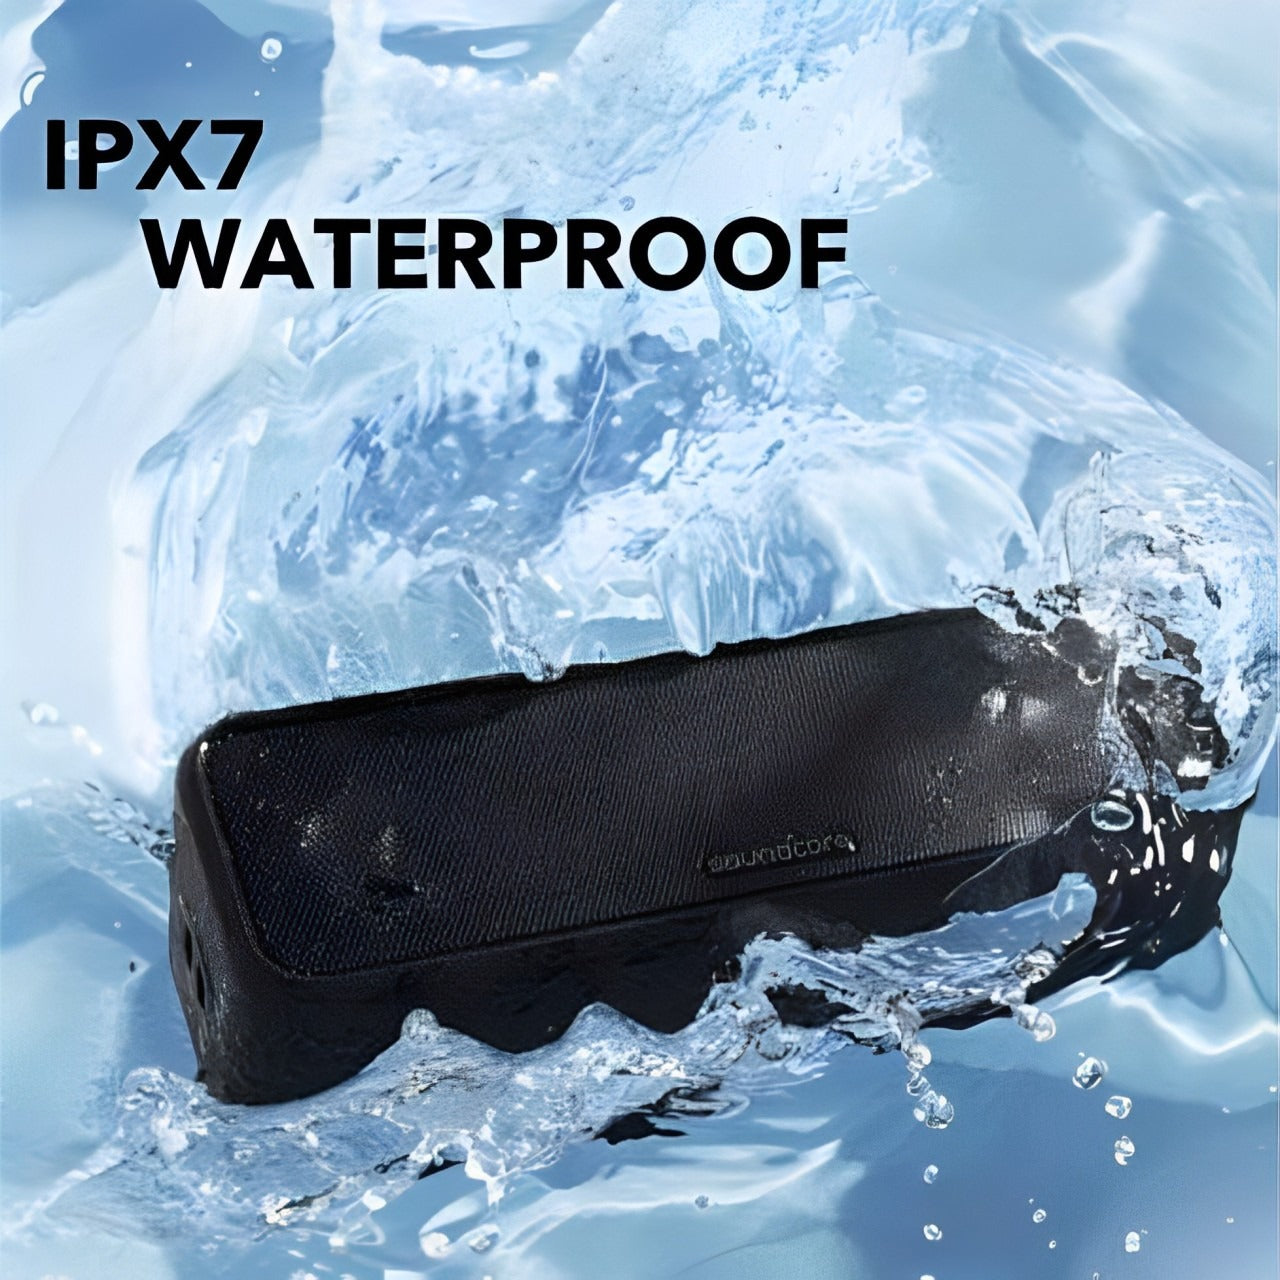 Waterproof Property of ANKER Soundcore 3 Bluetooth Speaker.